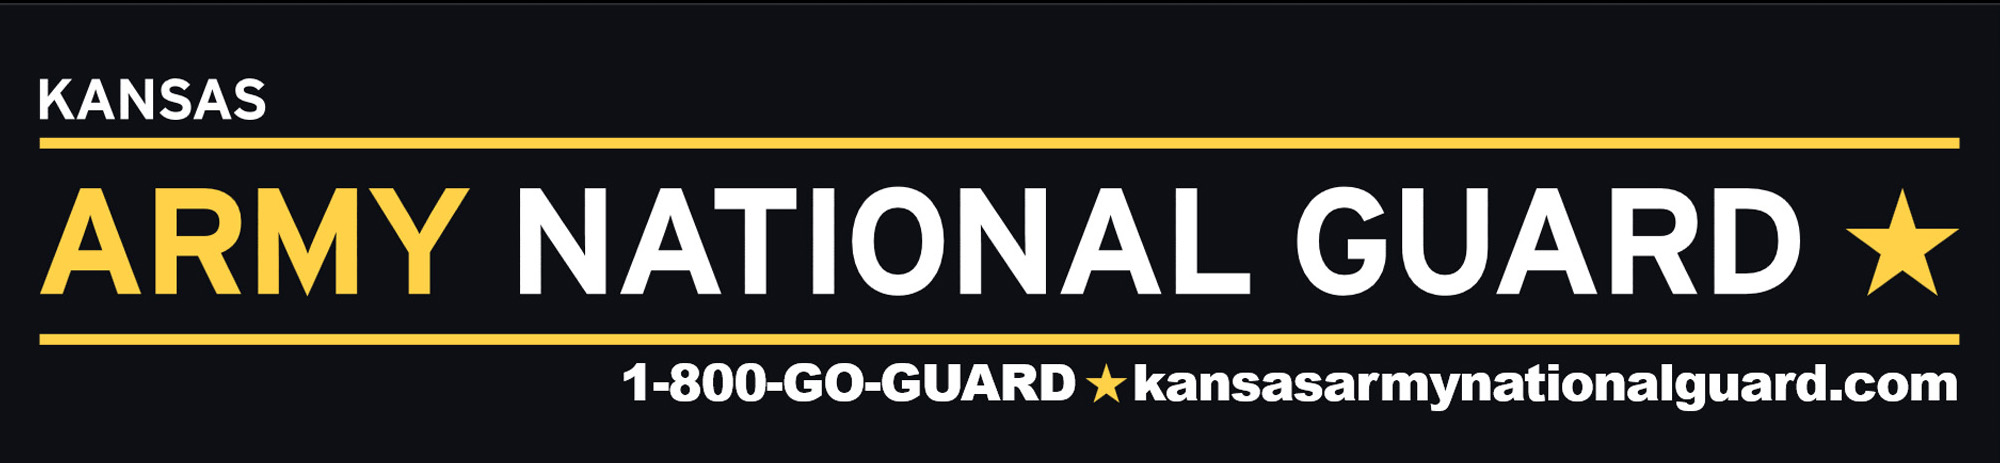 Kansas army National Guard